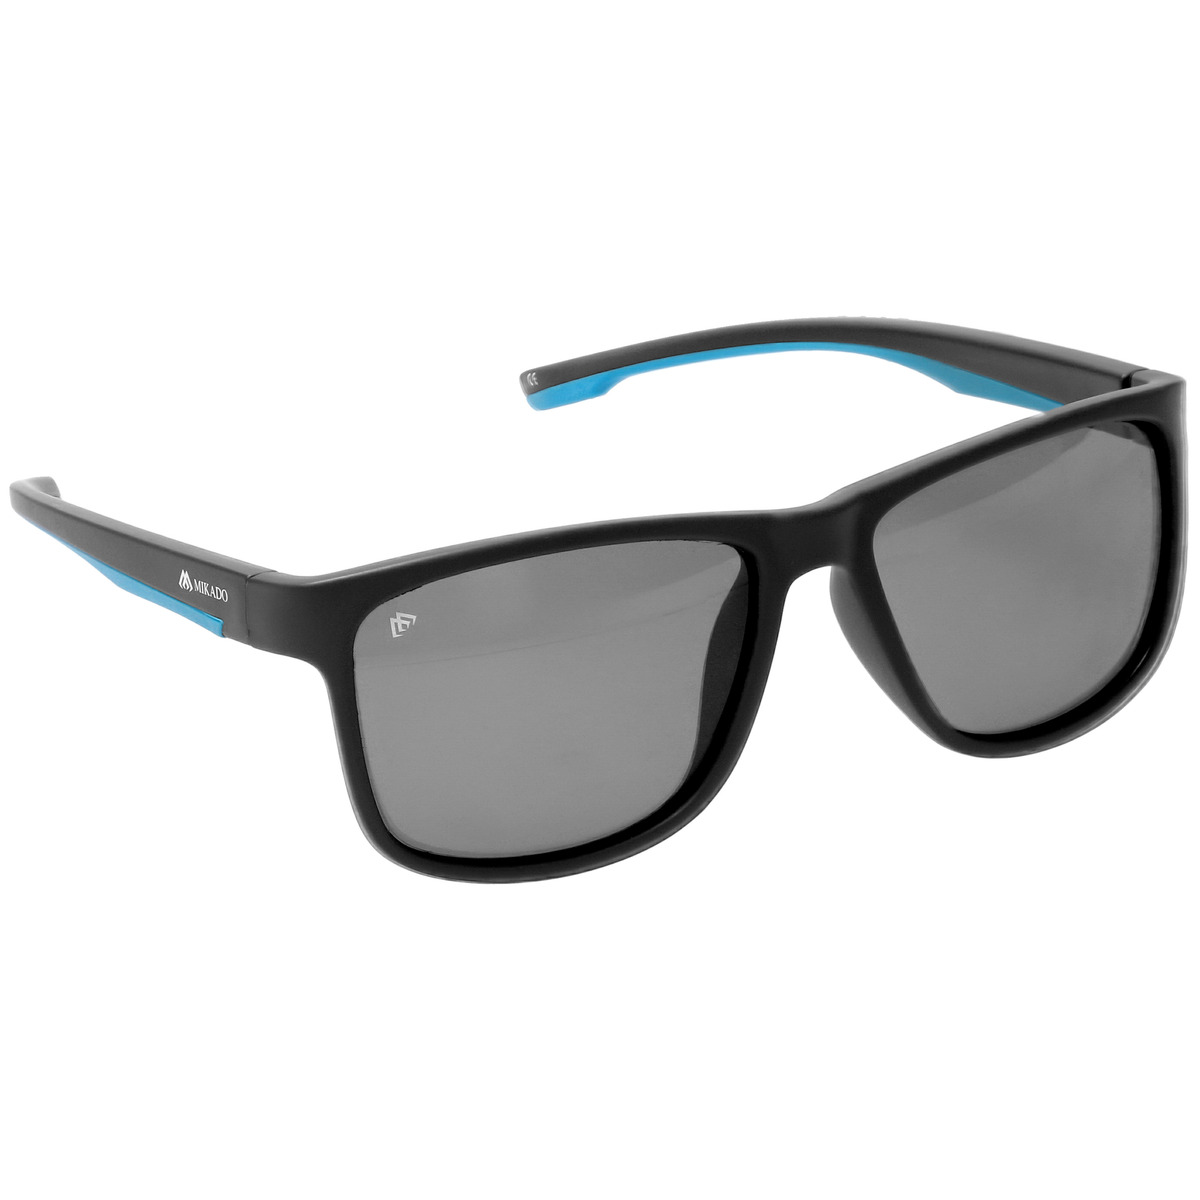 Mikado Sunglasses Polarized - 484 BLUE AND BROWN